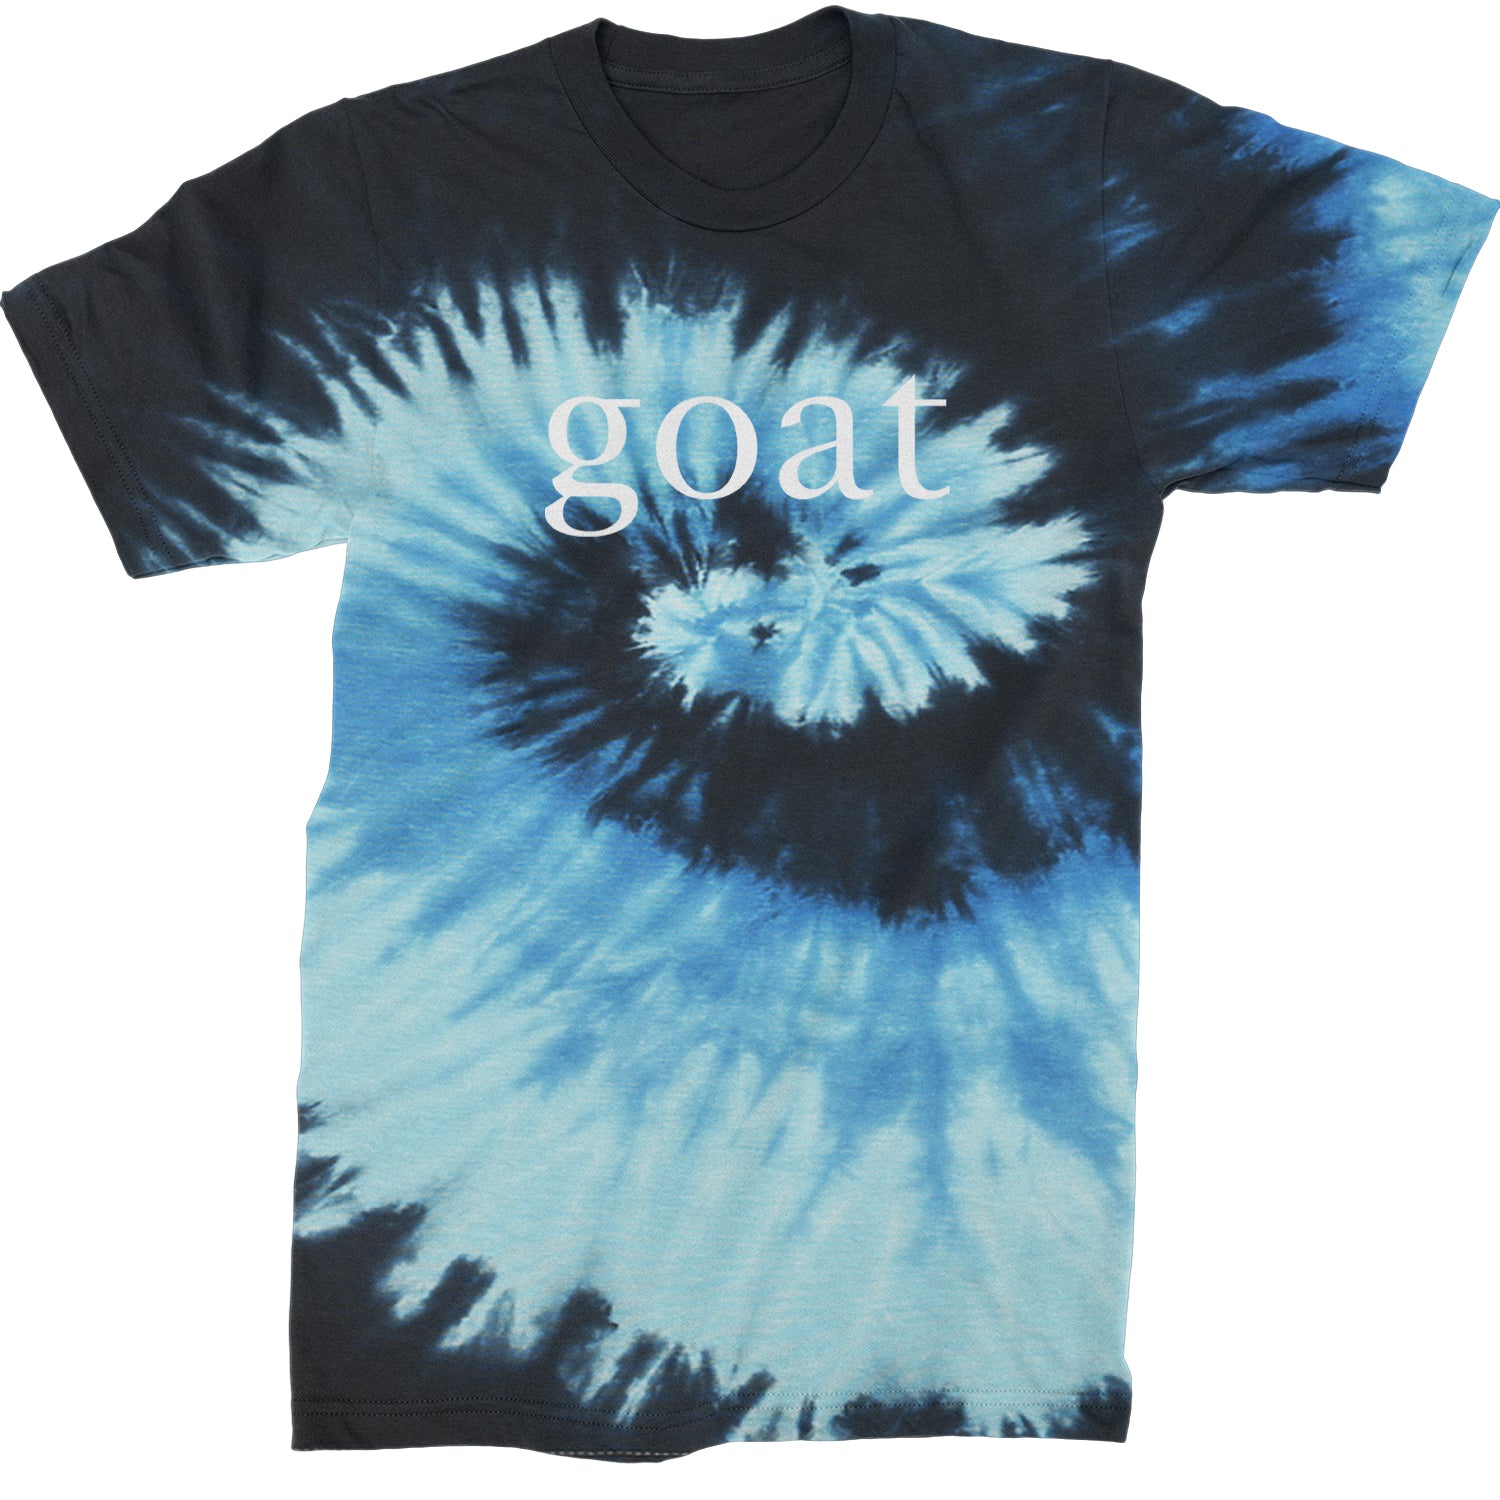 GOAT - Greatest Of All Time  Mens T-shirt Tie-Dye Blue Ocean